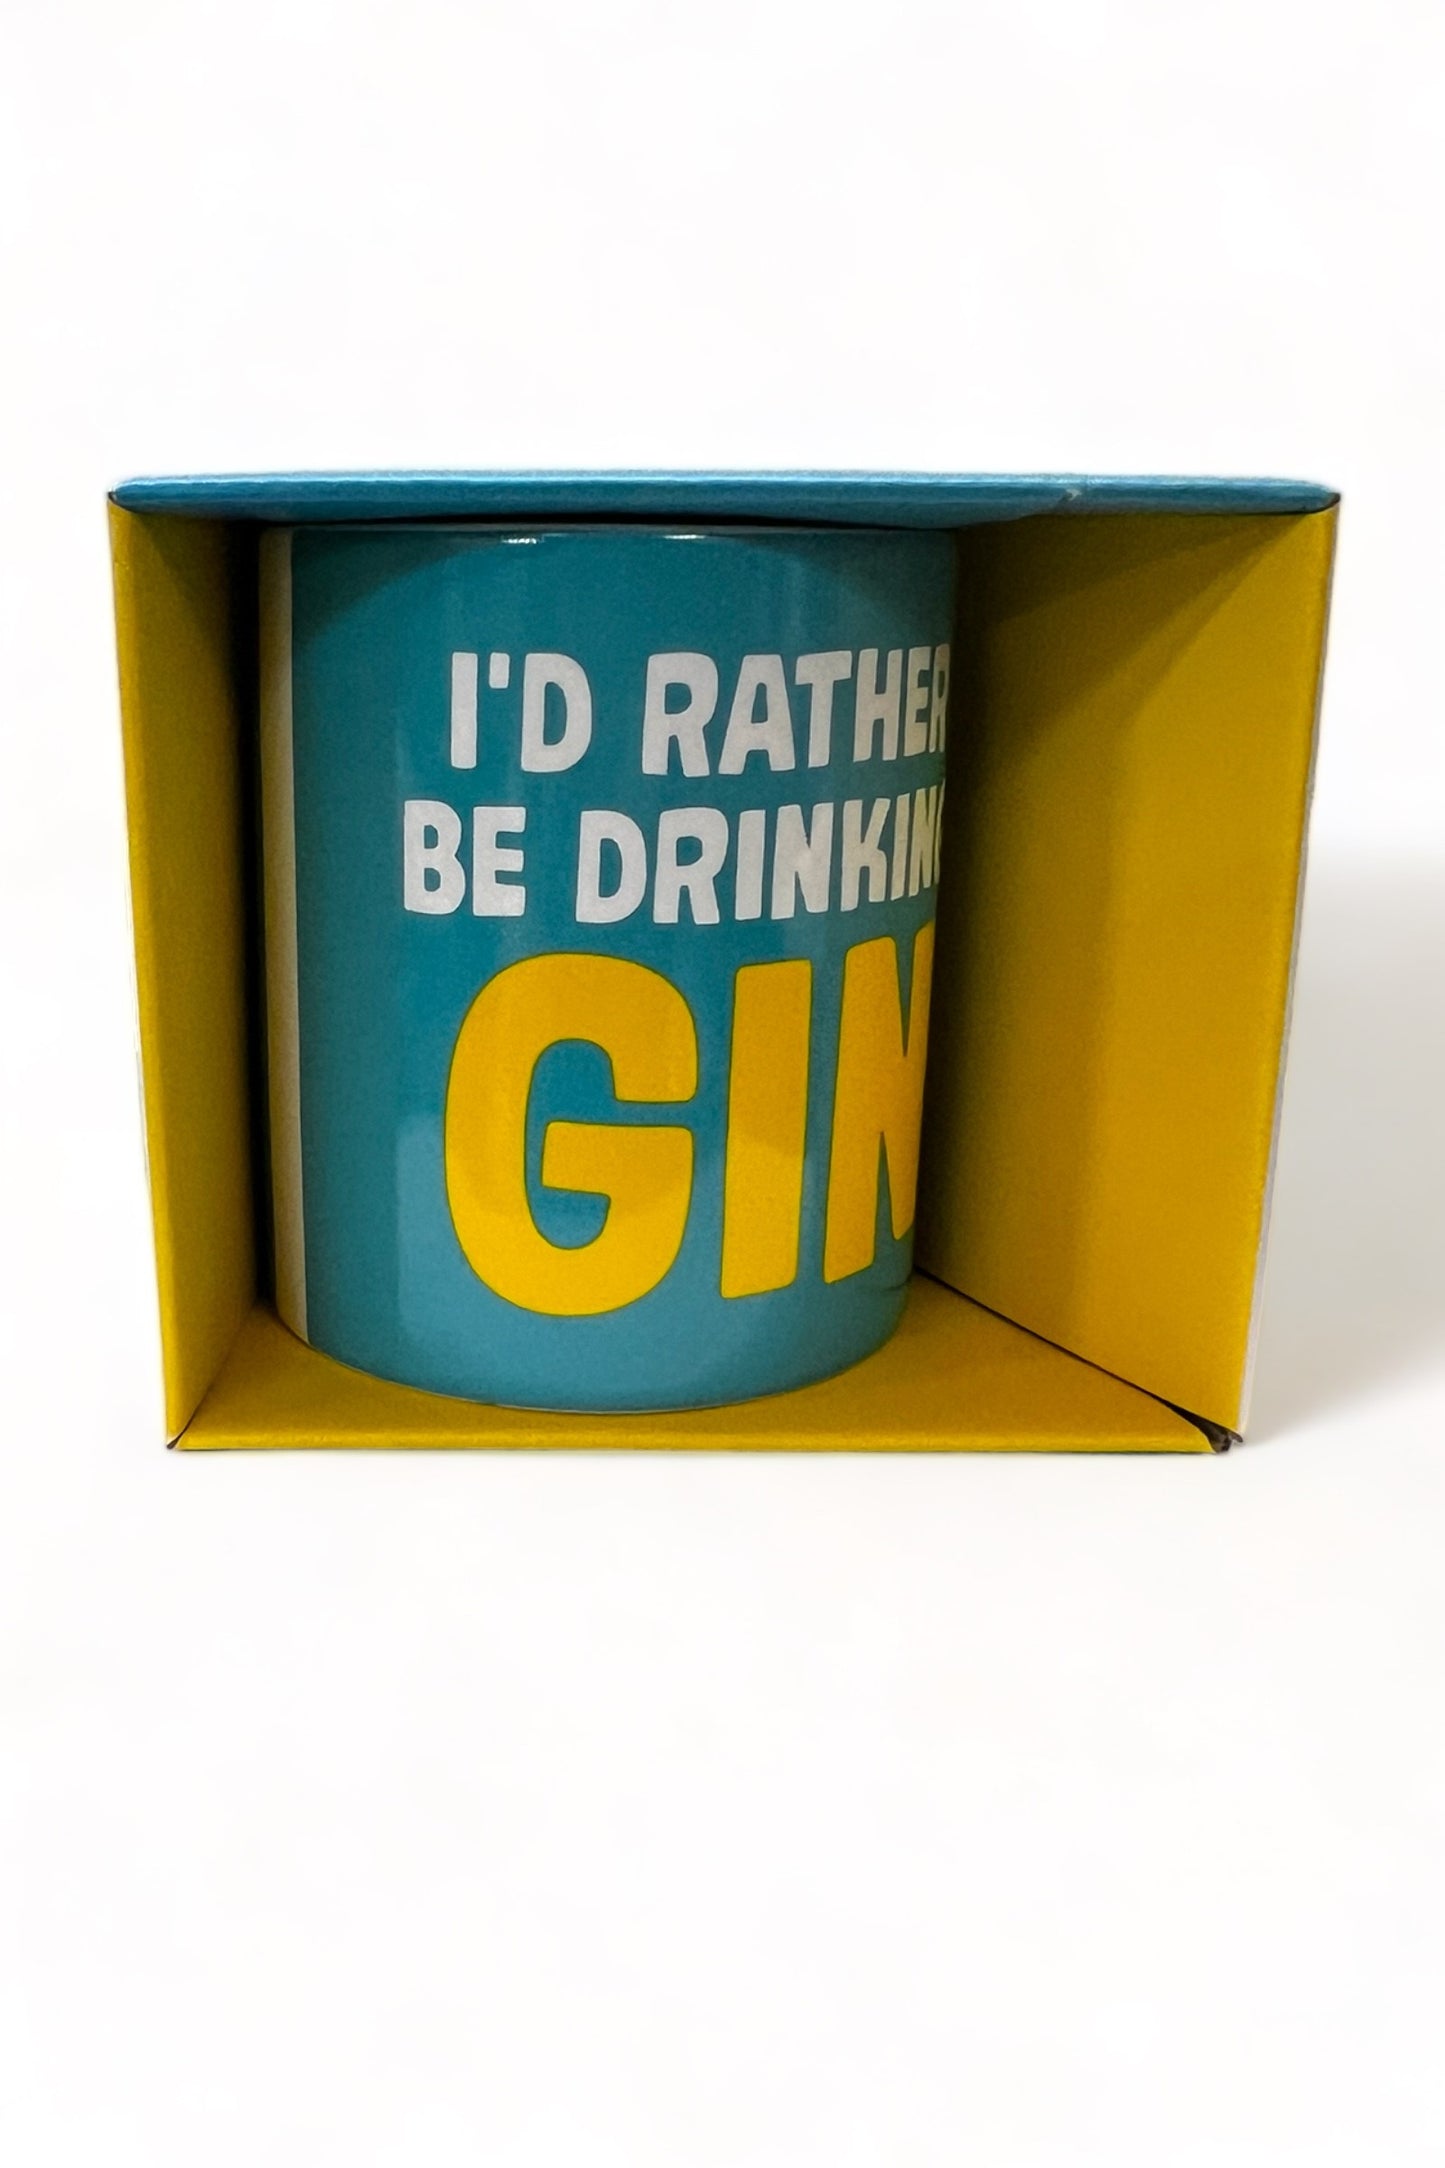 I’d Rather Be Drinking Gin Mug